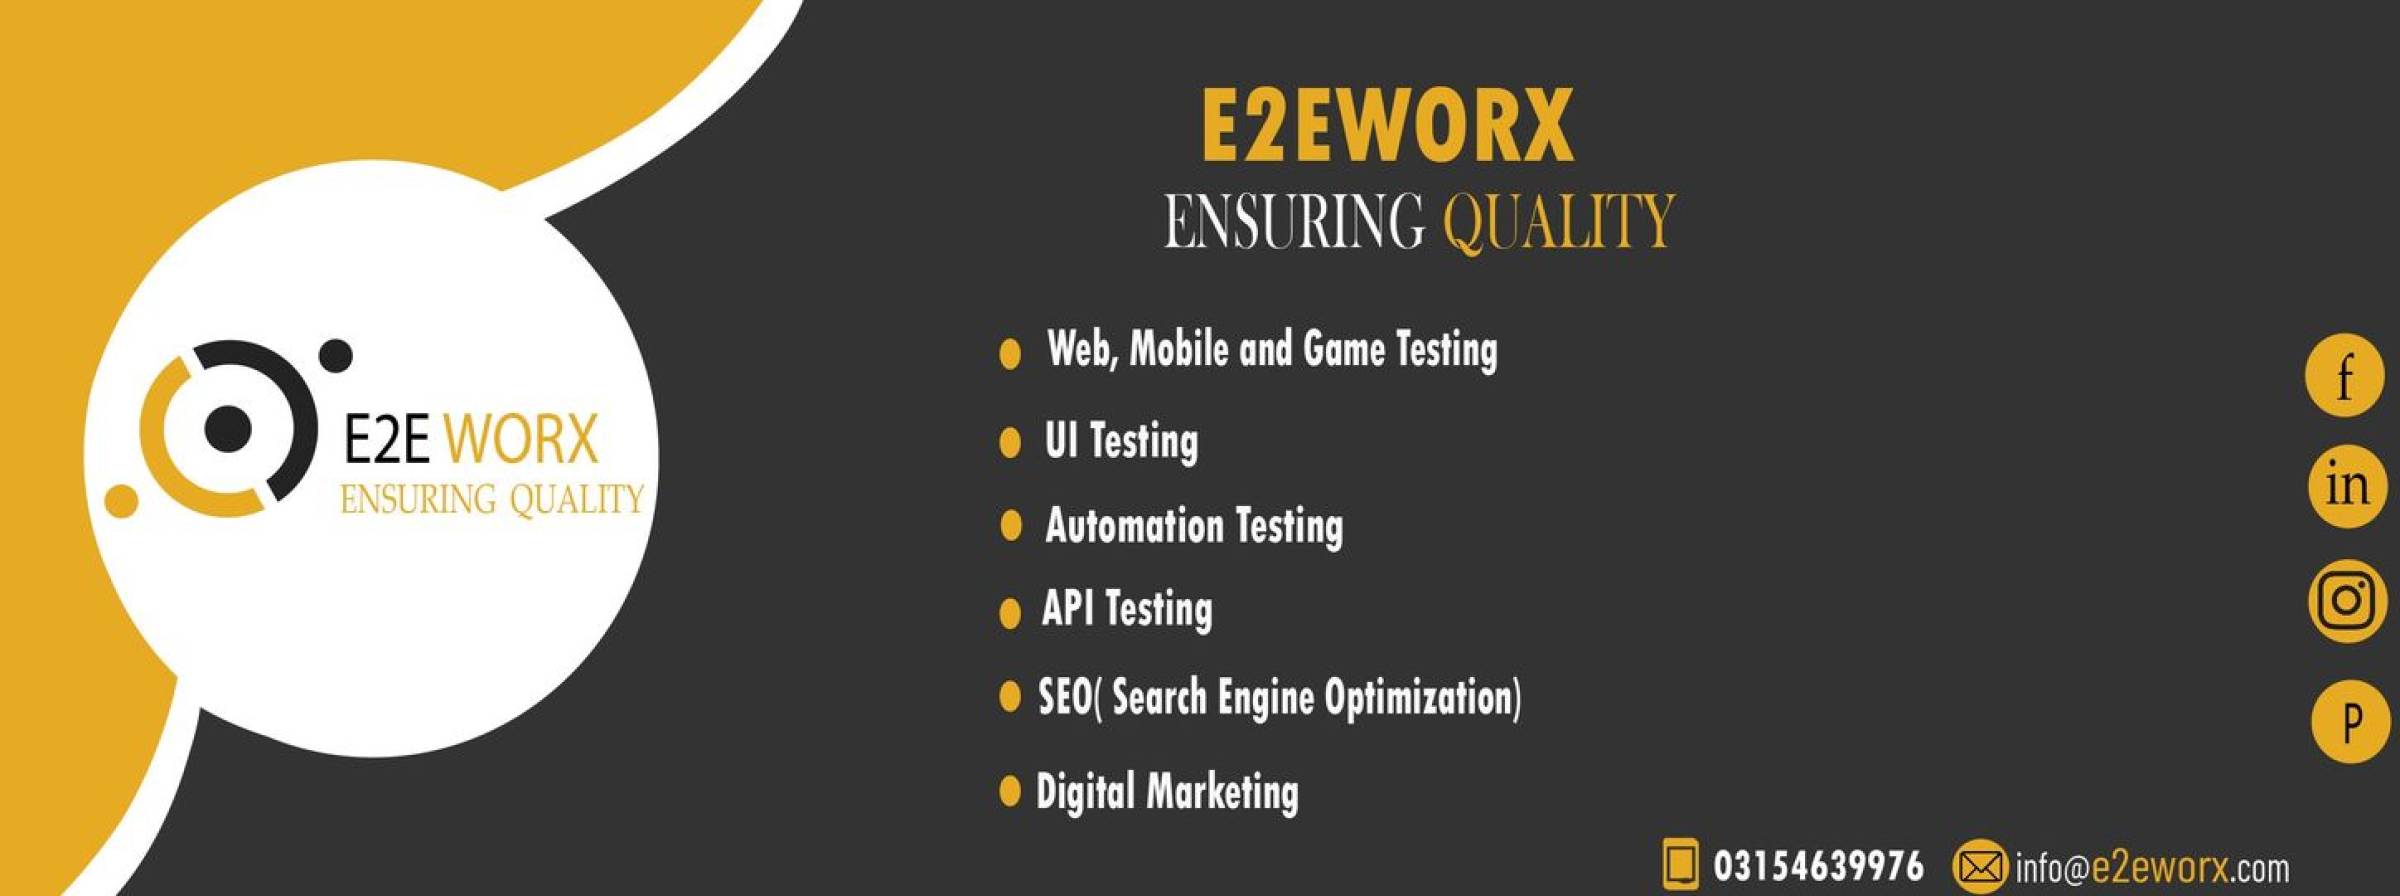 E2EWorx Ensuring Quality